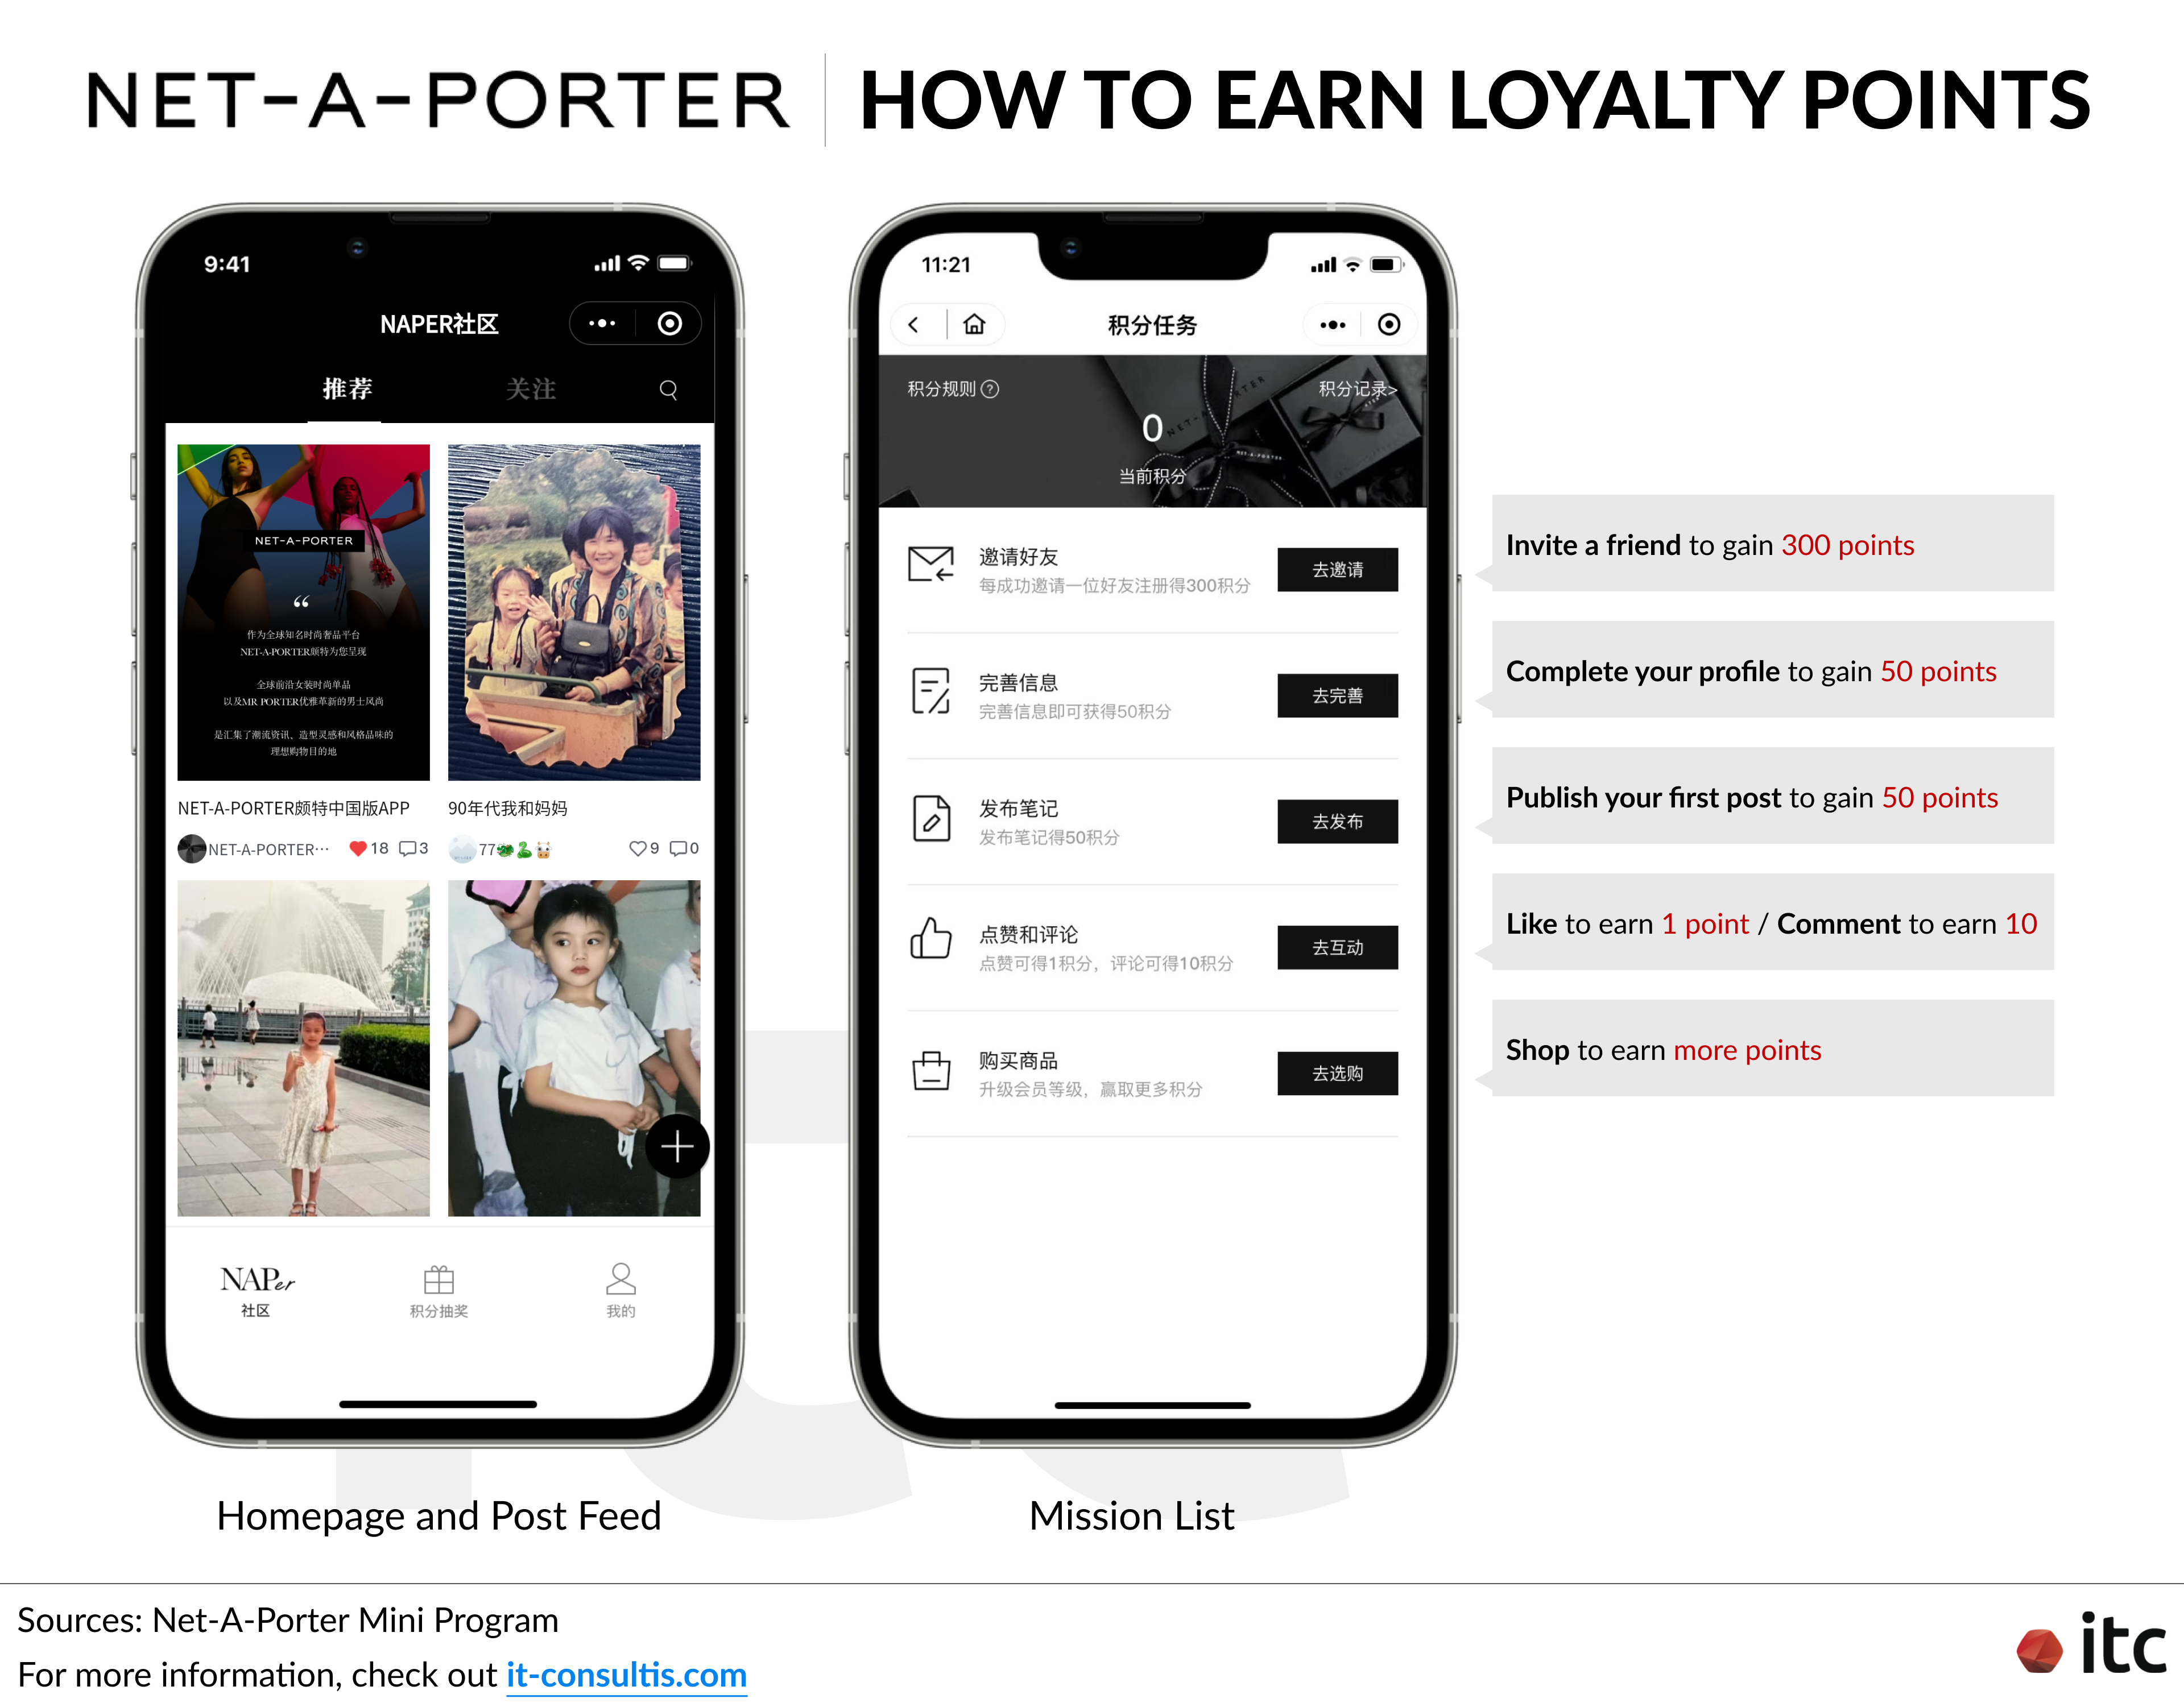 How to earn loyalty points on Net-A-Porter Mini Program